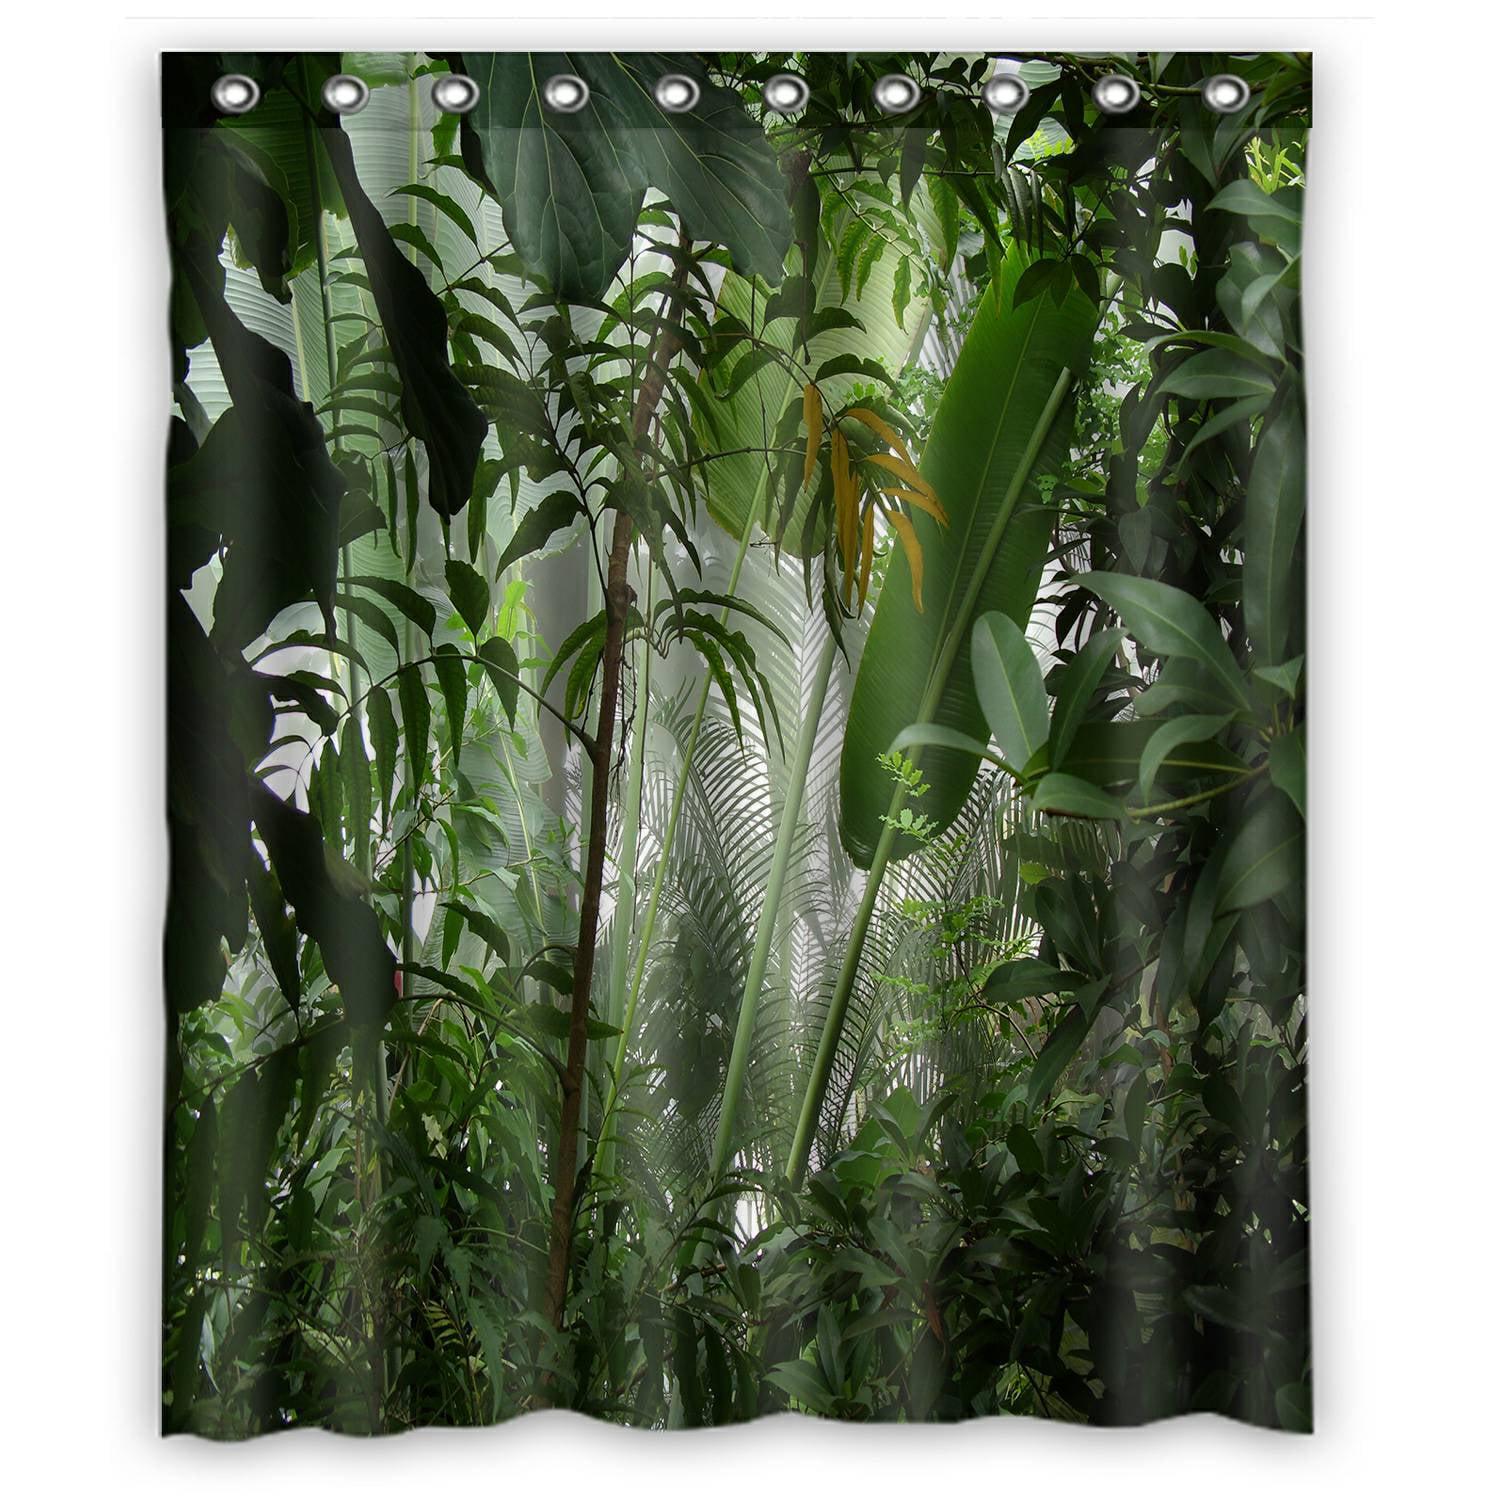 Eczjnt Misty Jungle Rainforest Scene Shower Curtain Bathroom Waterproof Home Decor 60x72 Inch